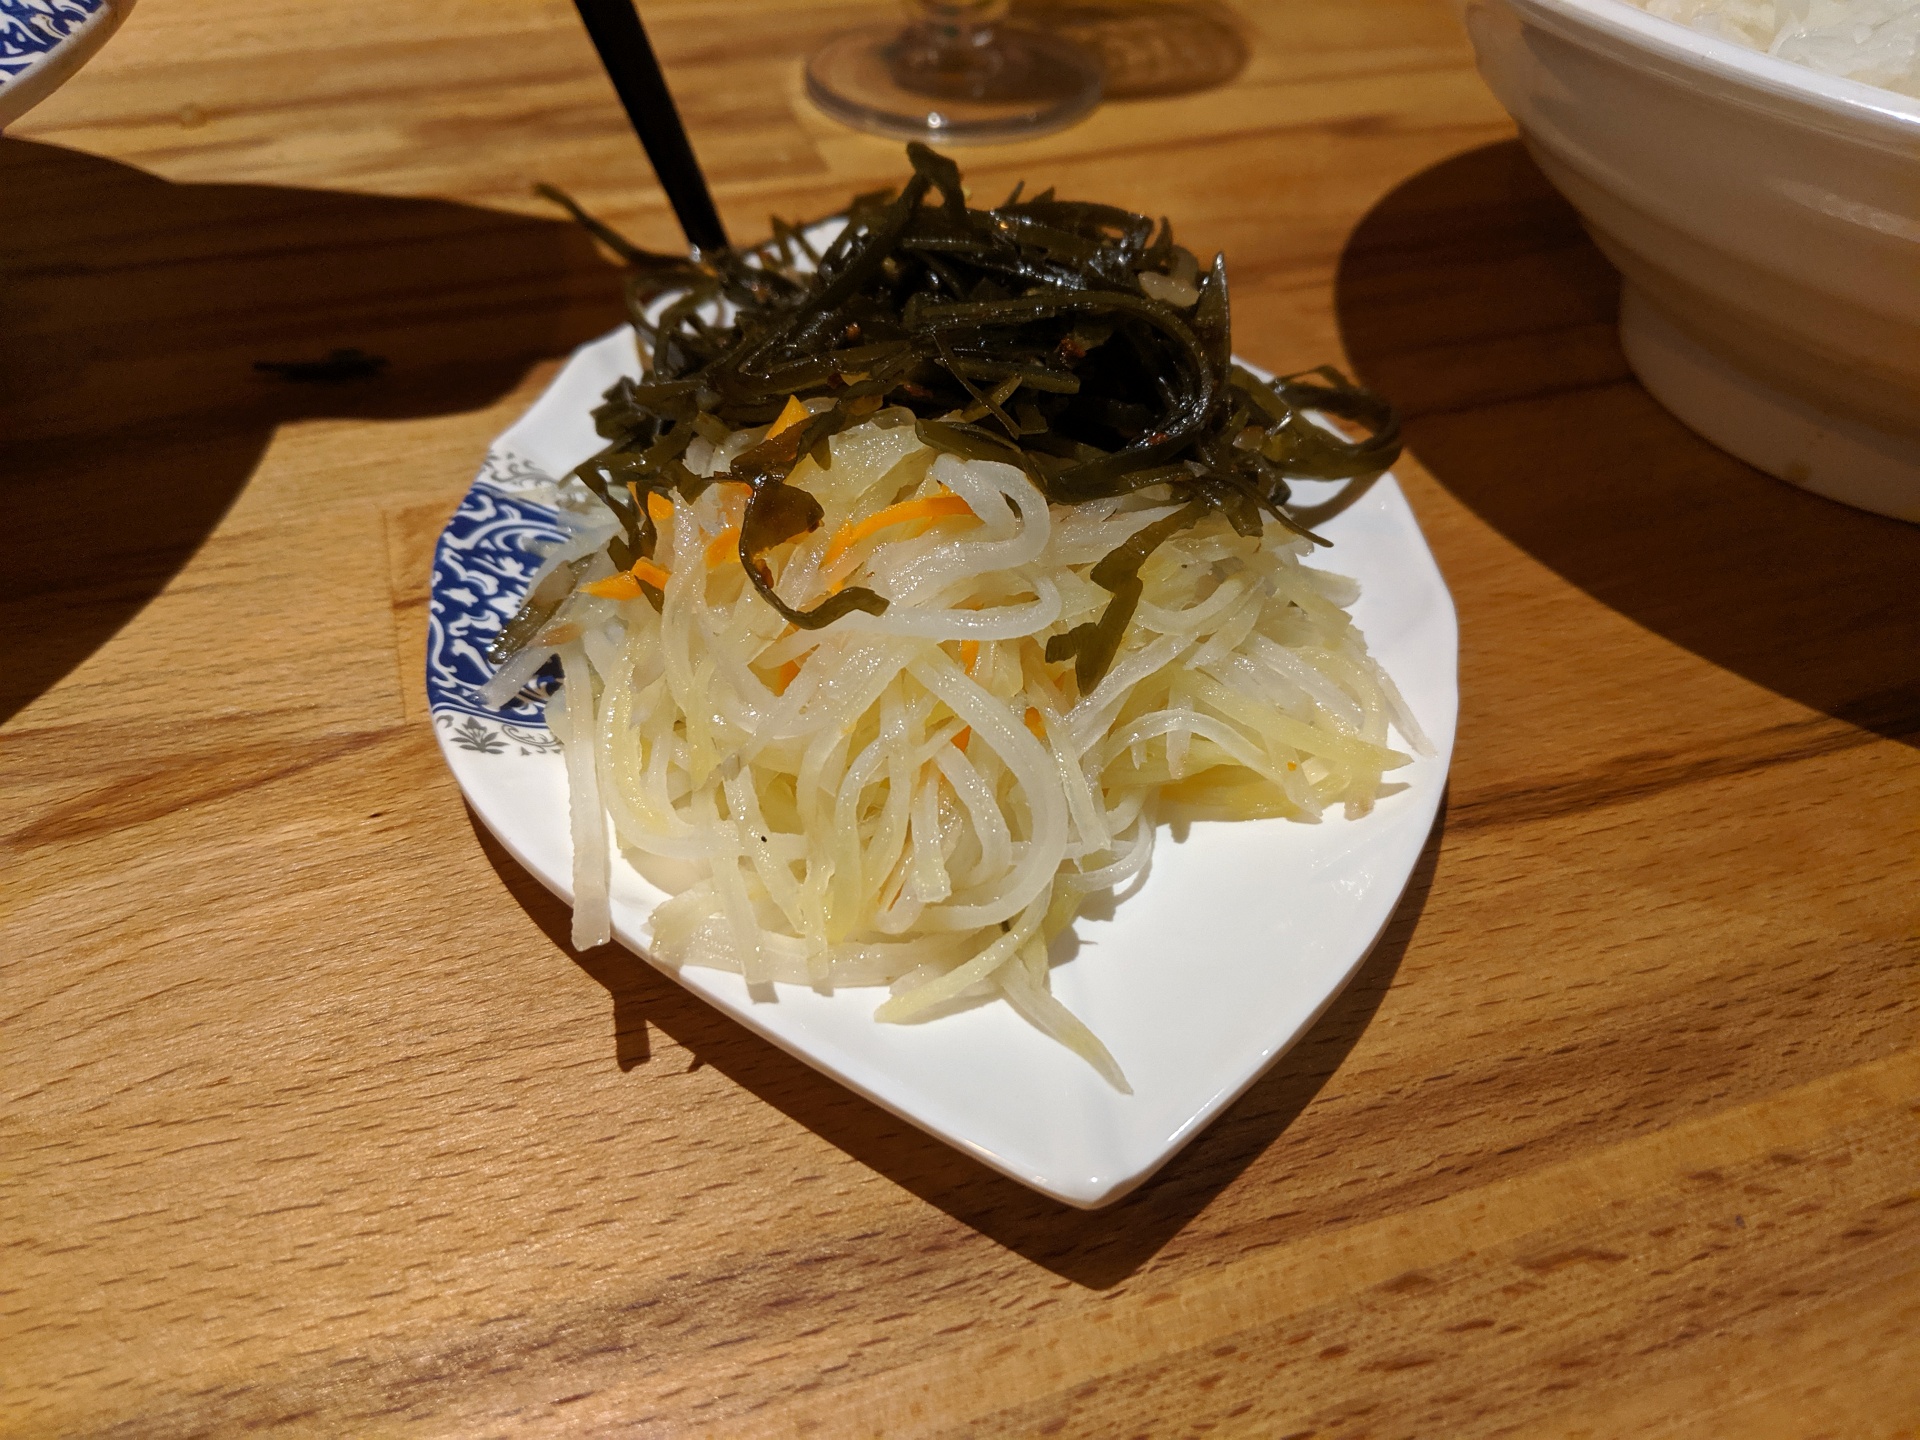 Thin shredded potatoes and seaweed